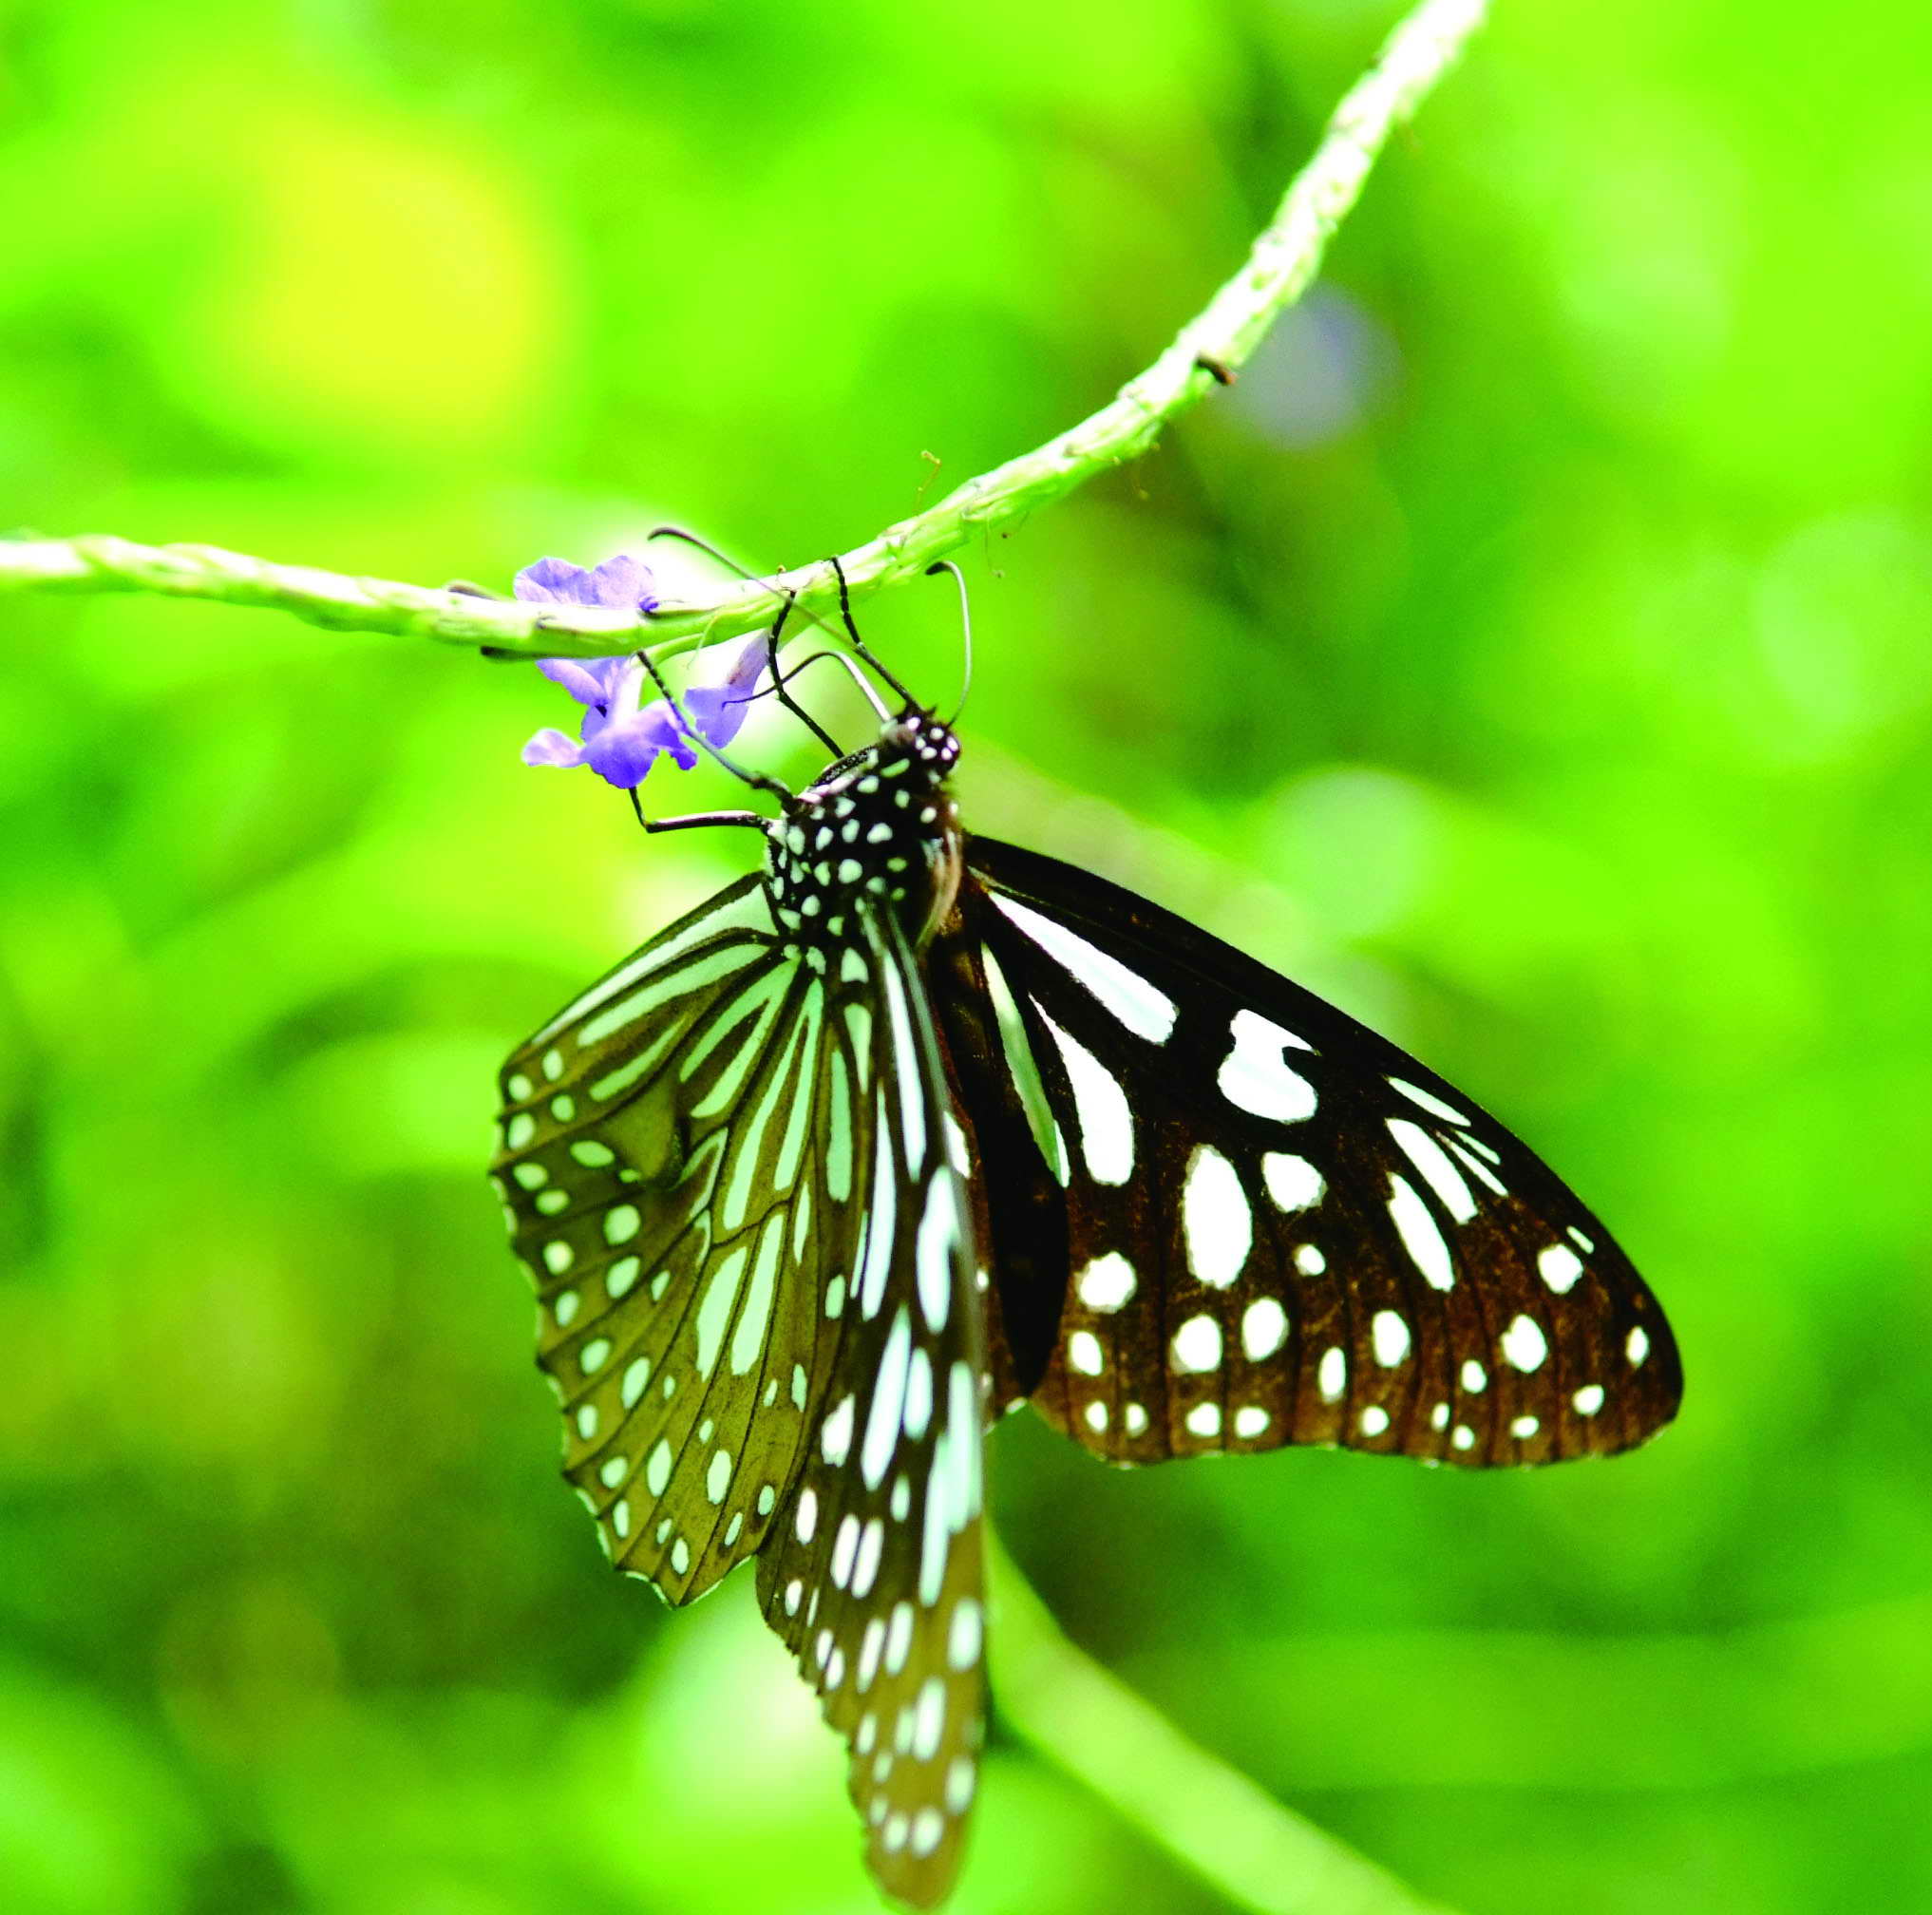 青斑蝶覓食仍不忘展示它牠的美麗   A beautiful exhibition of the Chestnut Tiger butterfly's wings